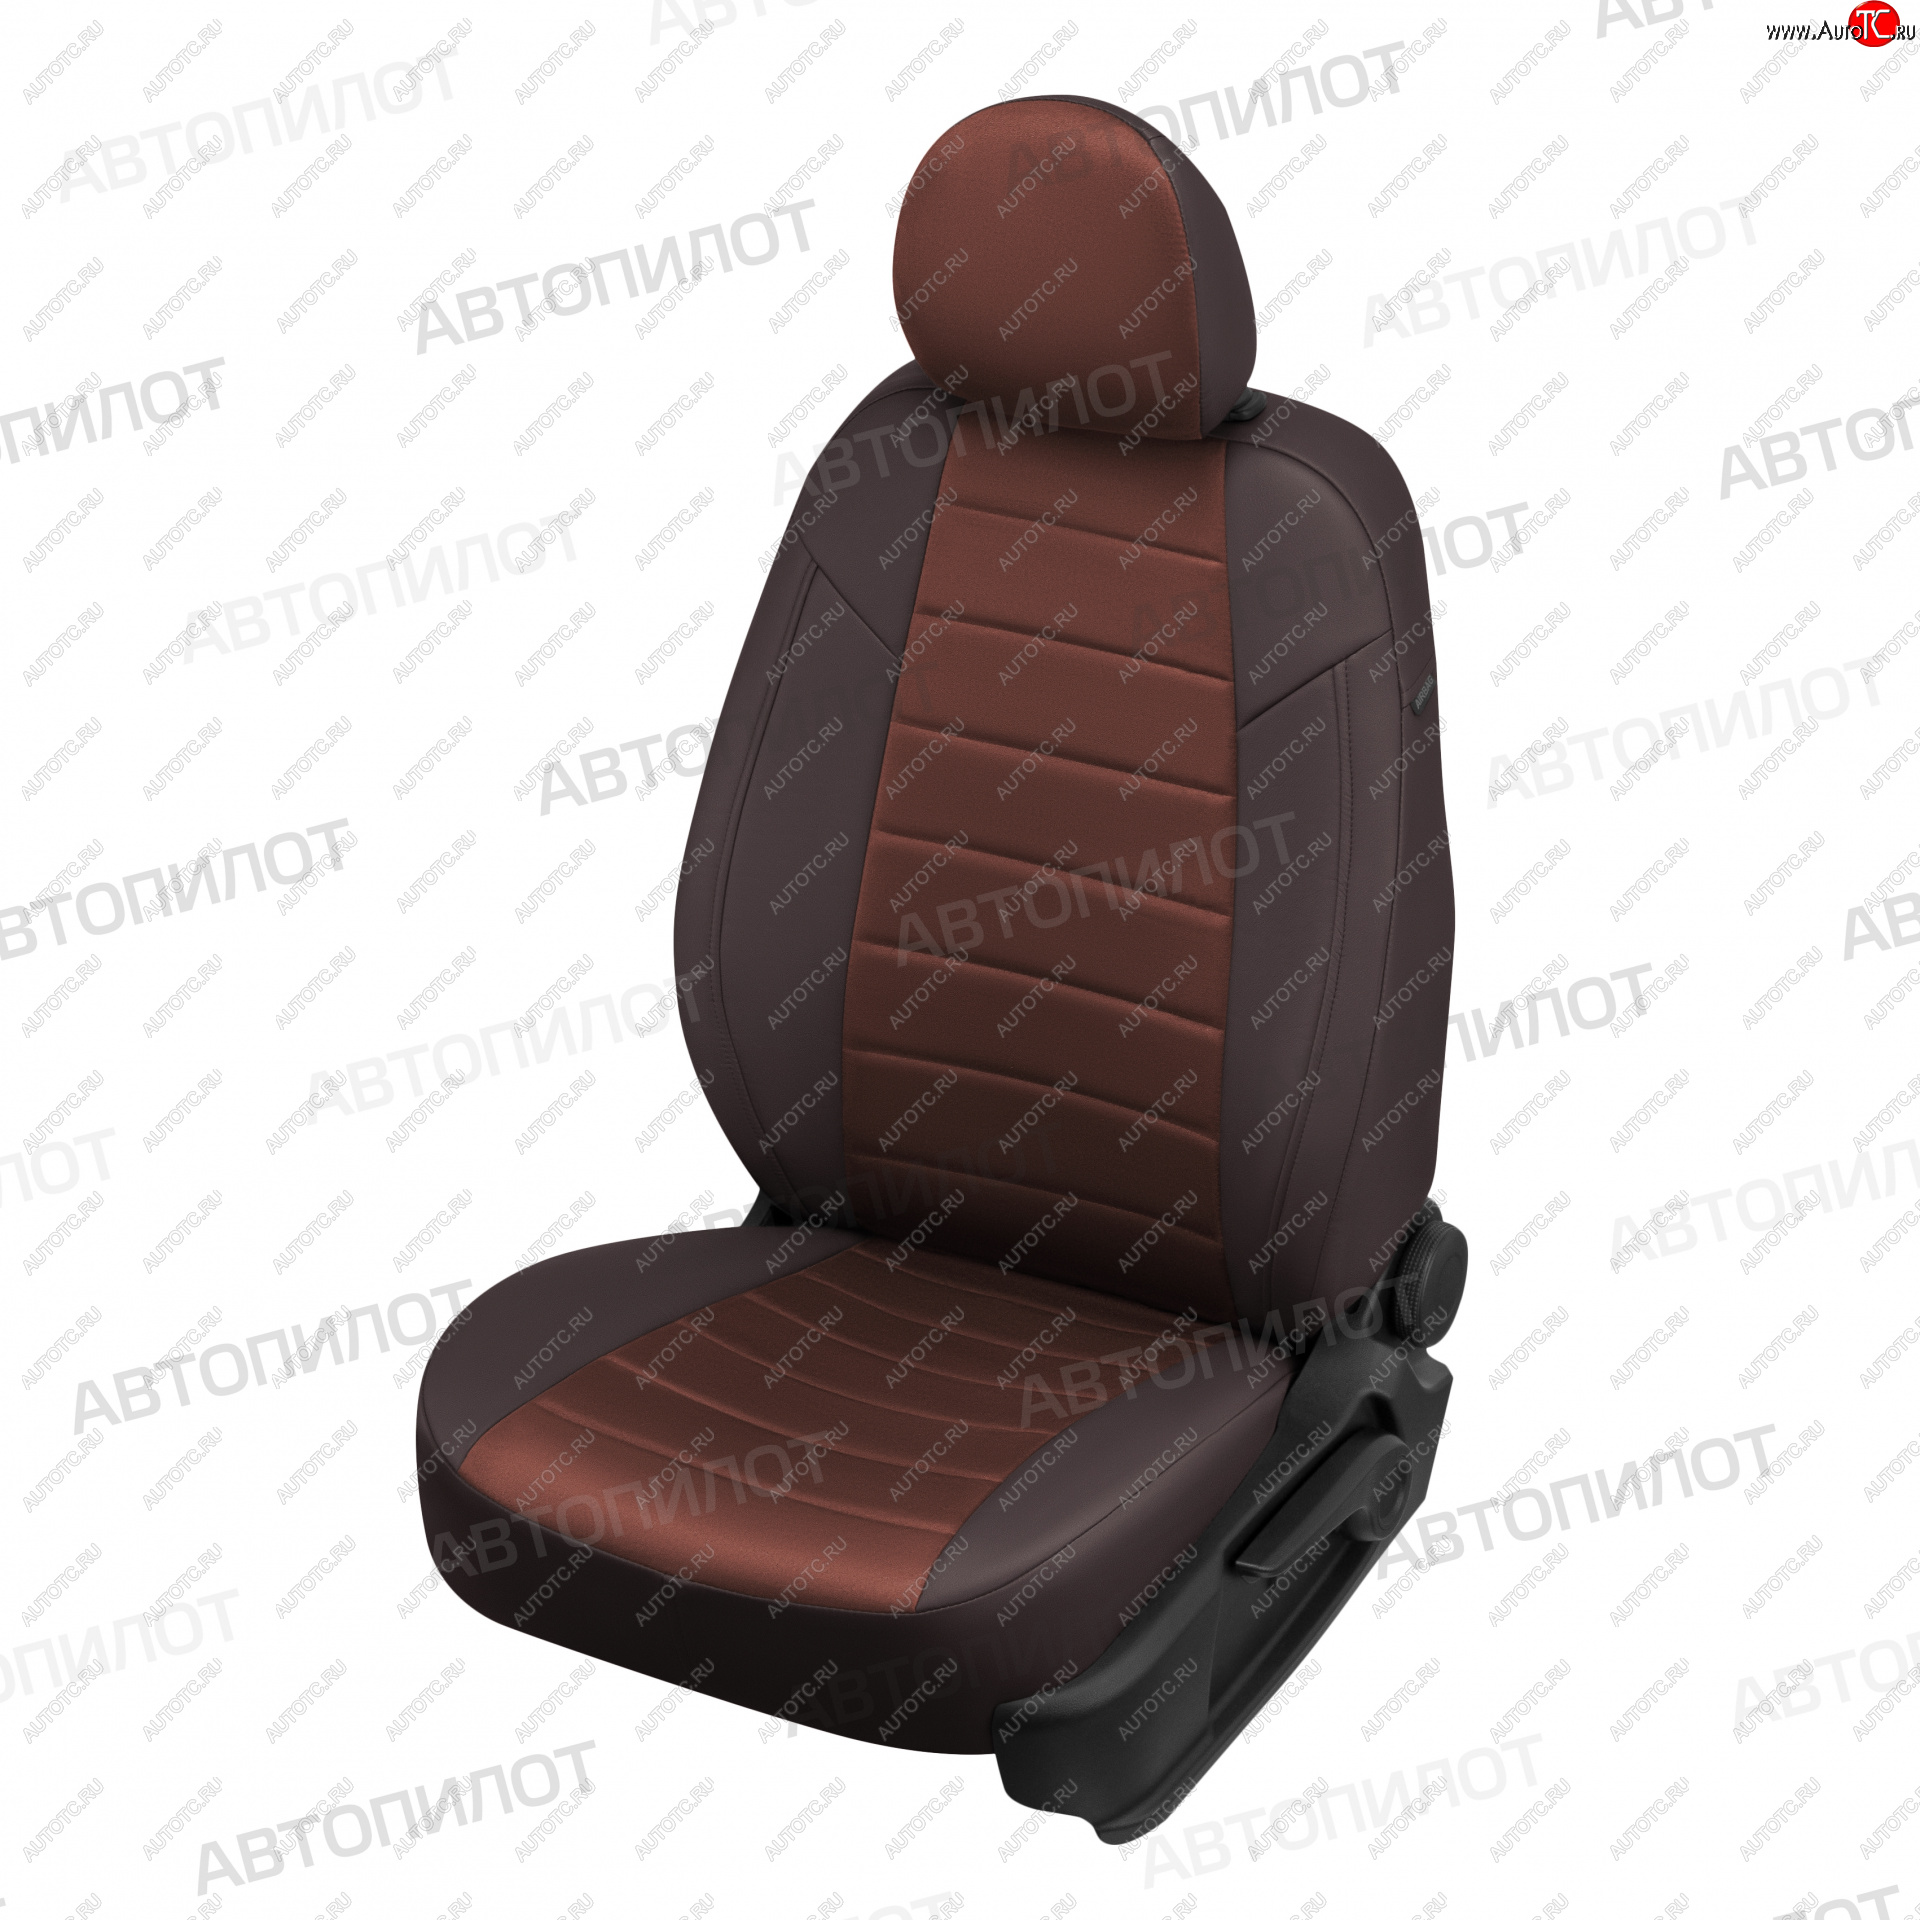 13 449 р. Чехлы сидений (экокожа/алькантара) Автопилот  Ford Fusion  1 (2002-2012) (шоколад)